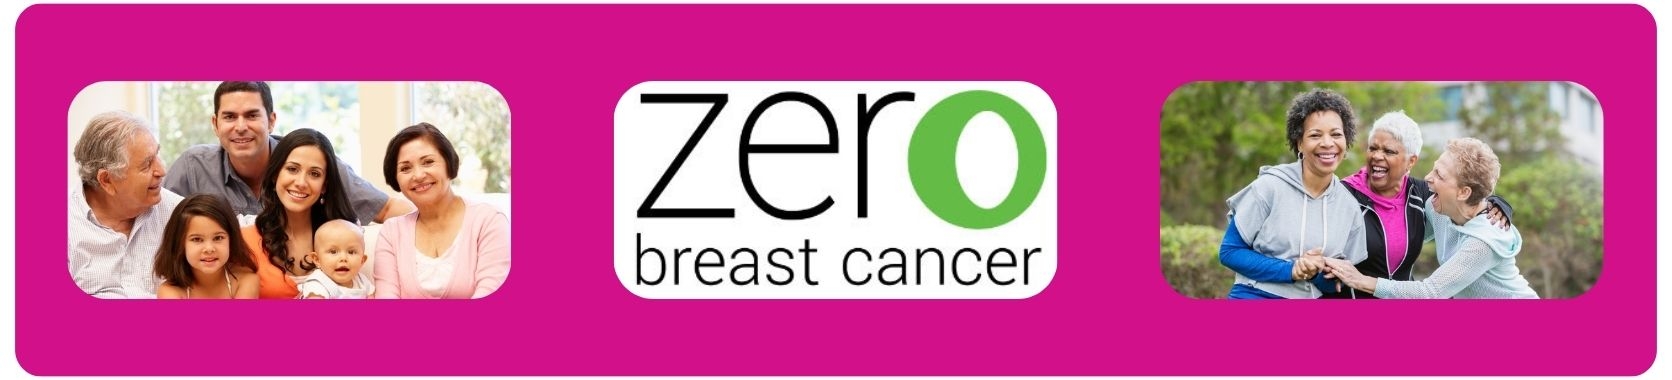 donate page image envision zero breast cancer